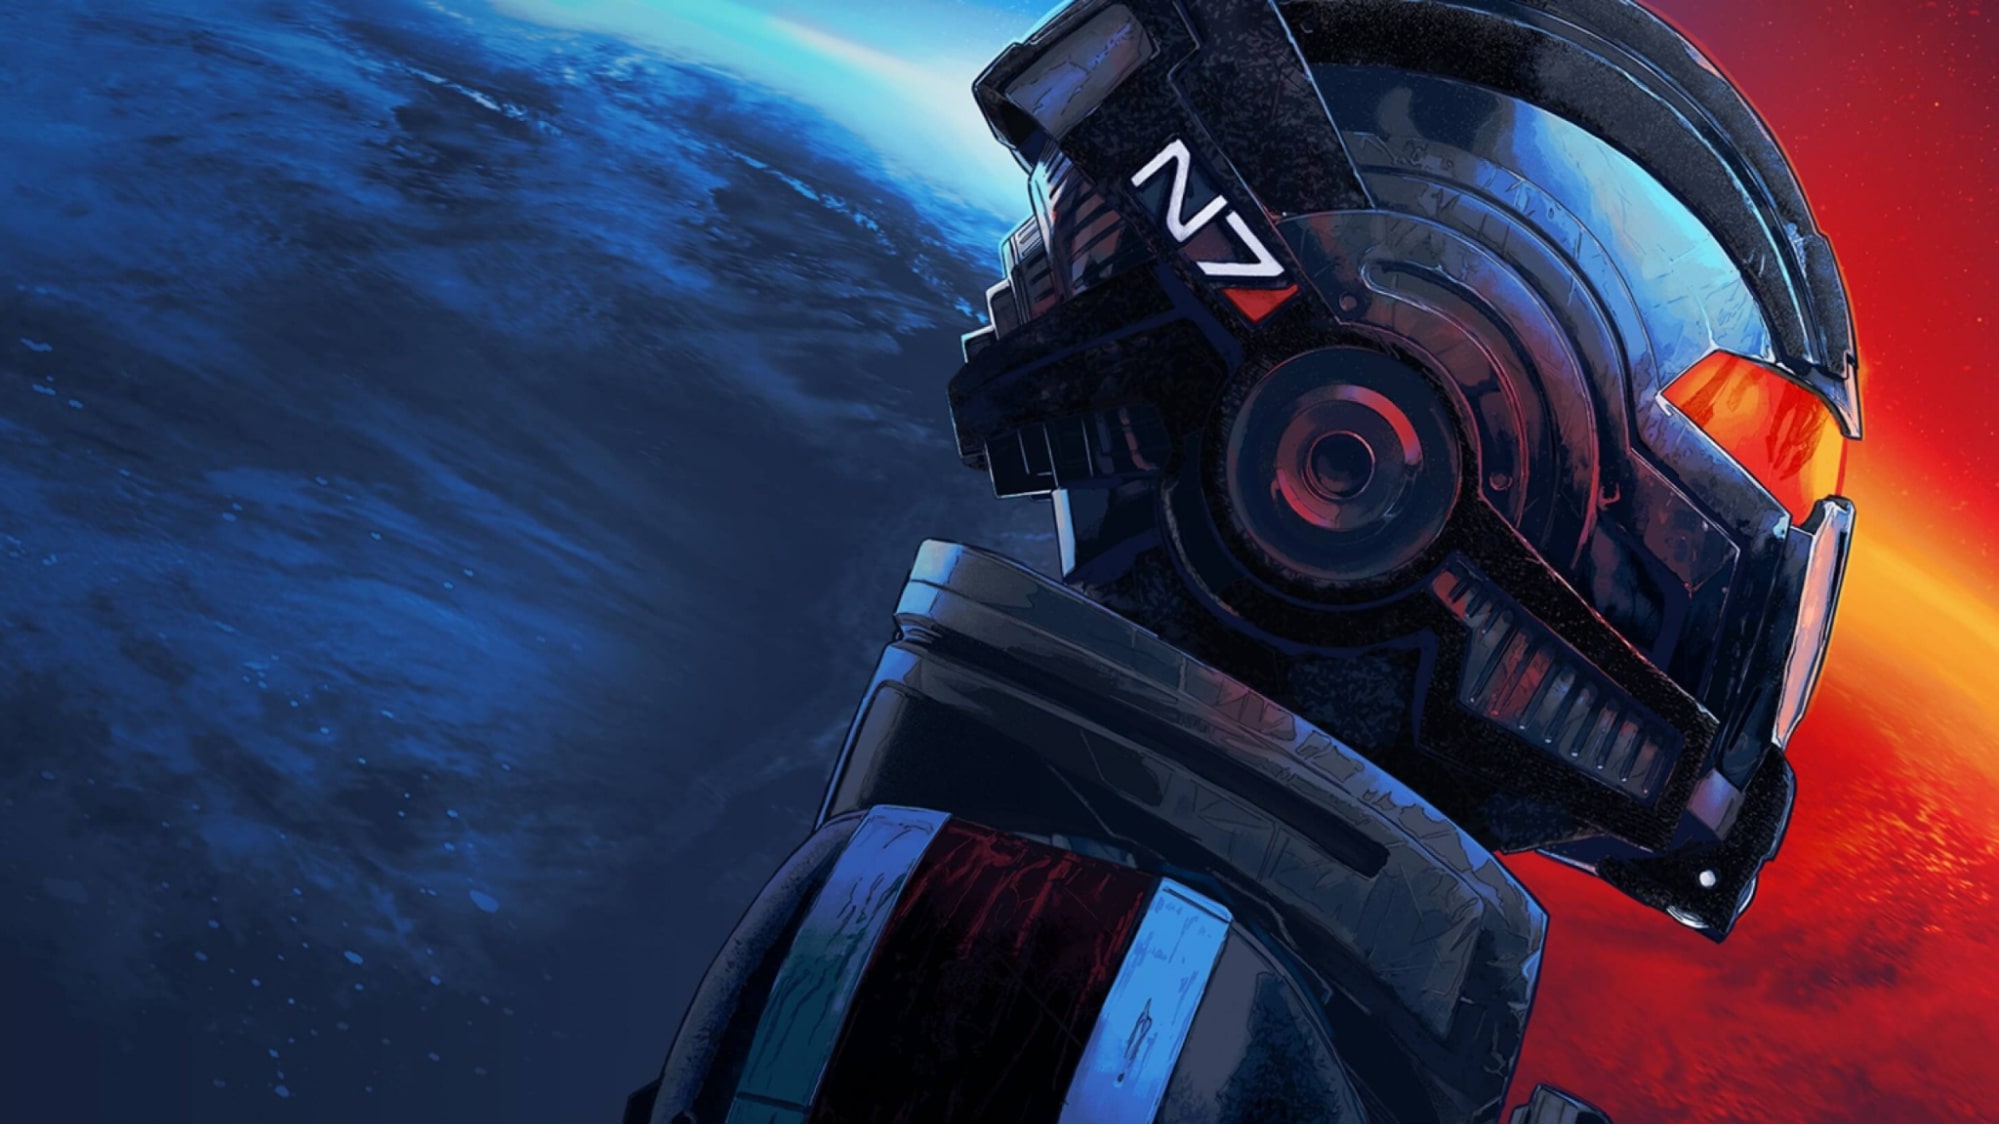 Re: Не запускается Mass Effect-1 на платформе Windows 10